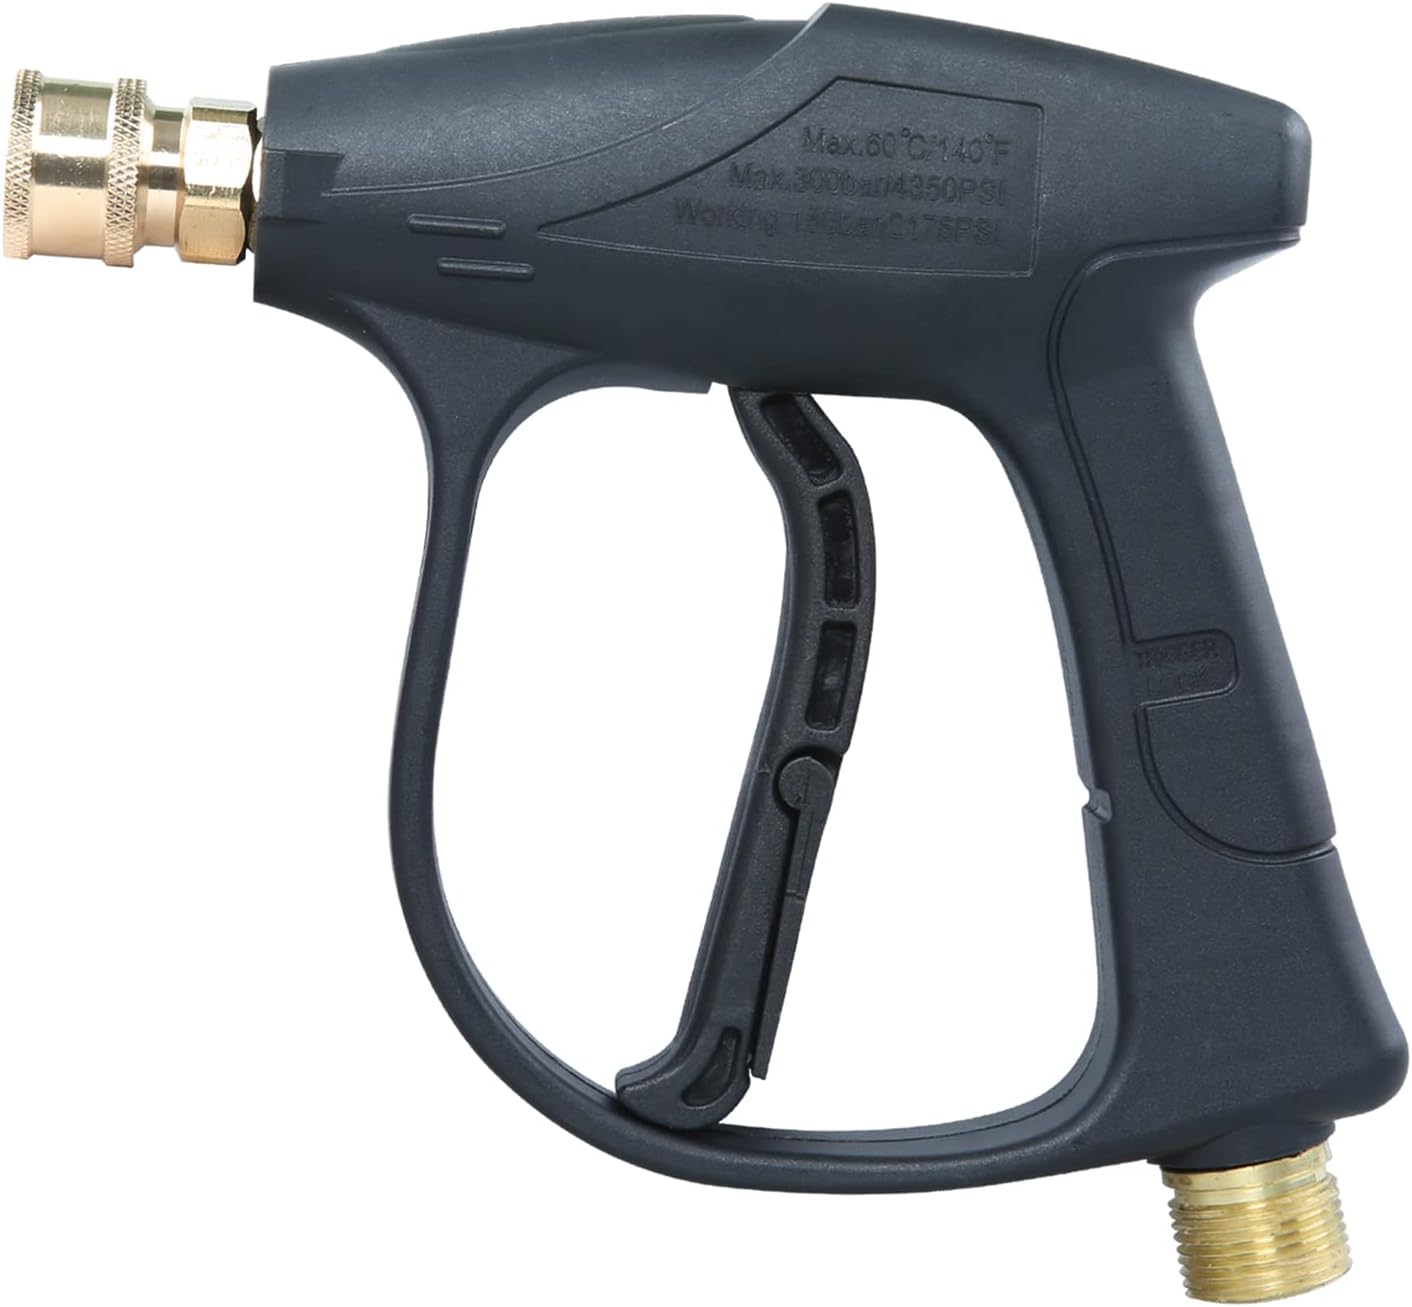 Sooprinse High Pressure Washer Gun 3000 PSI Max, Power Washer Short Gun with 1/4 Inch Quick Connector, M22-14